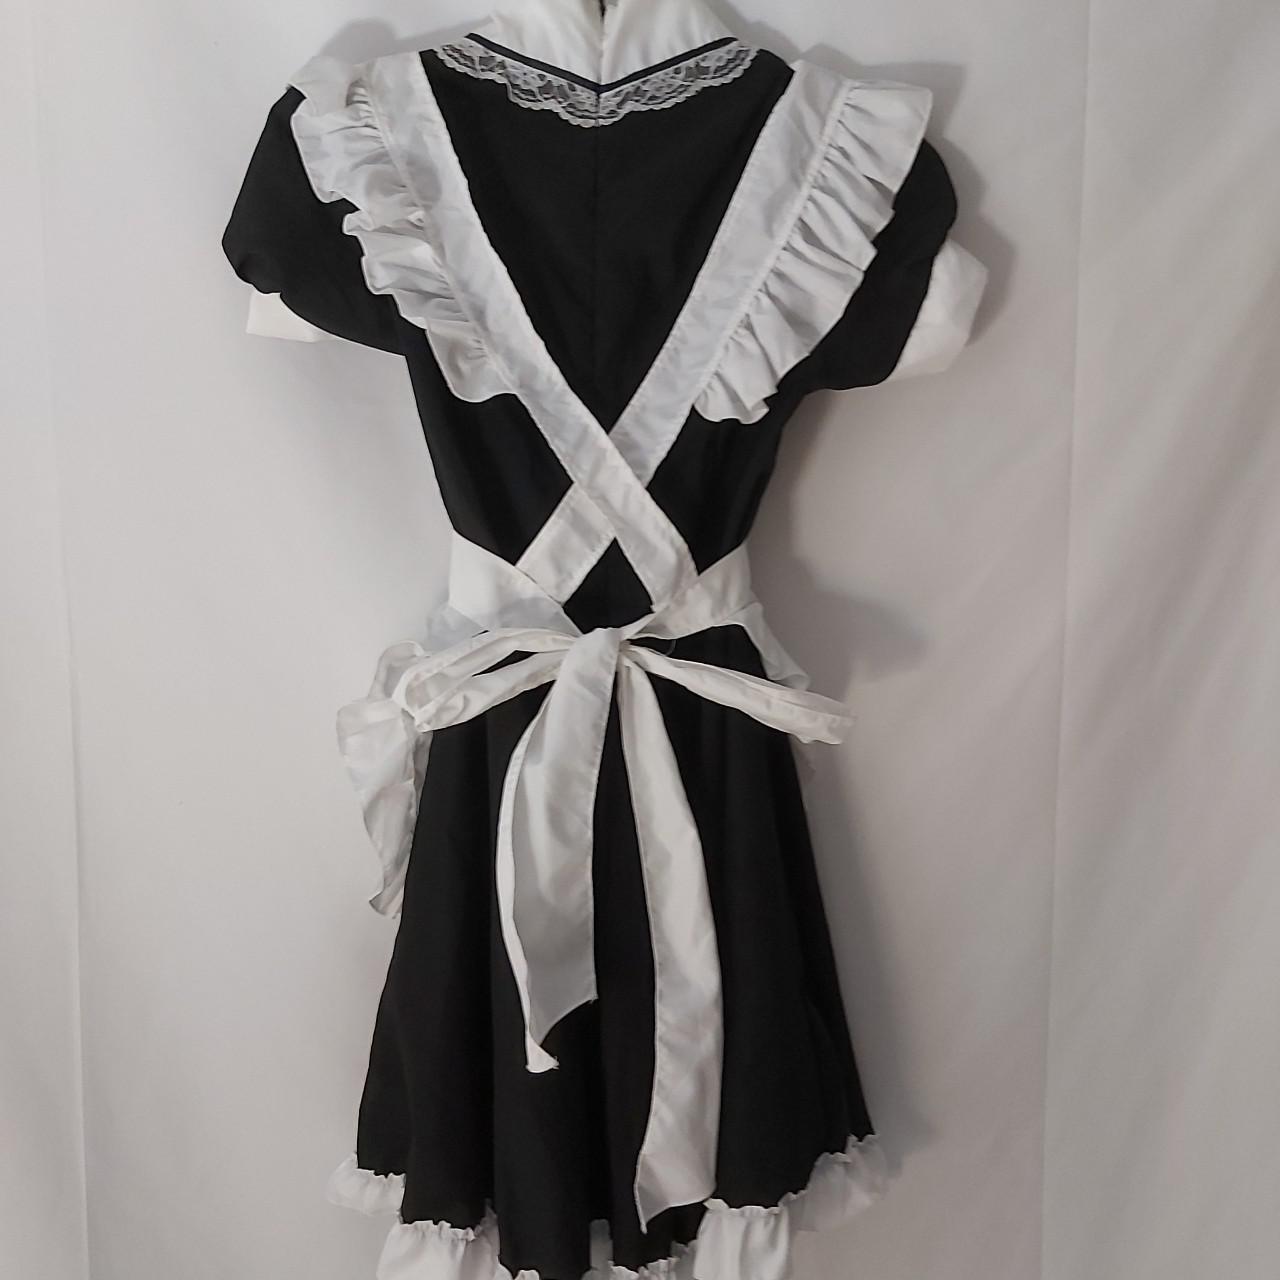 Black & White Maid Outfit Includes Dress, Apron,... - Depop